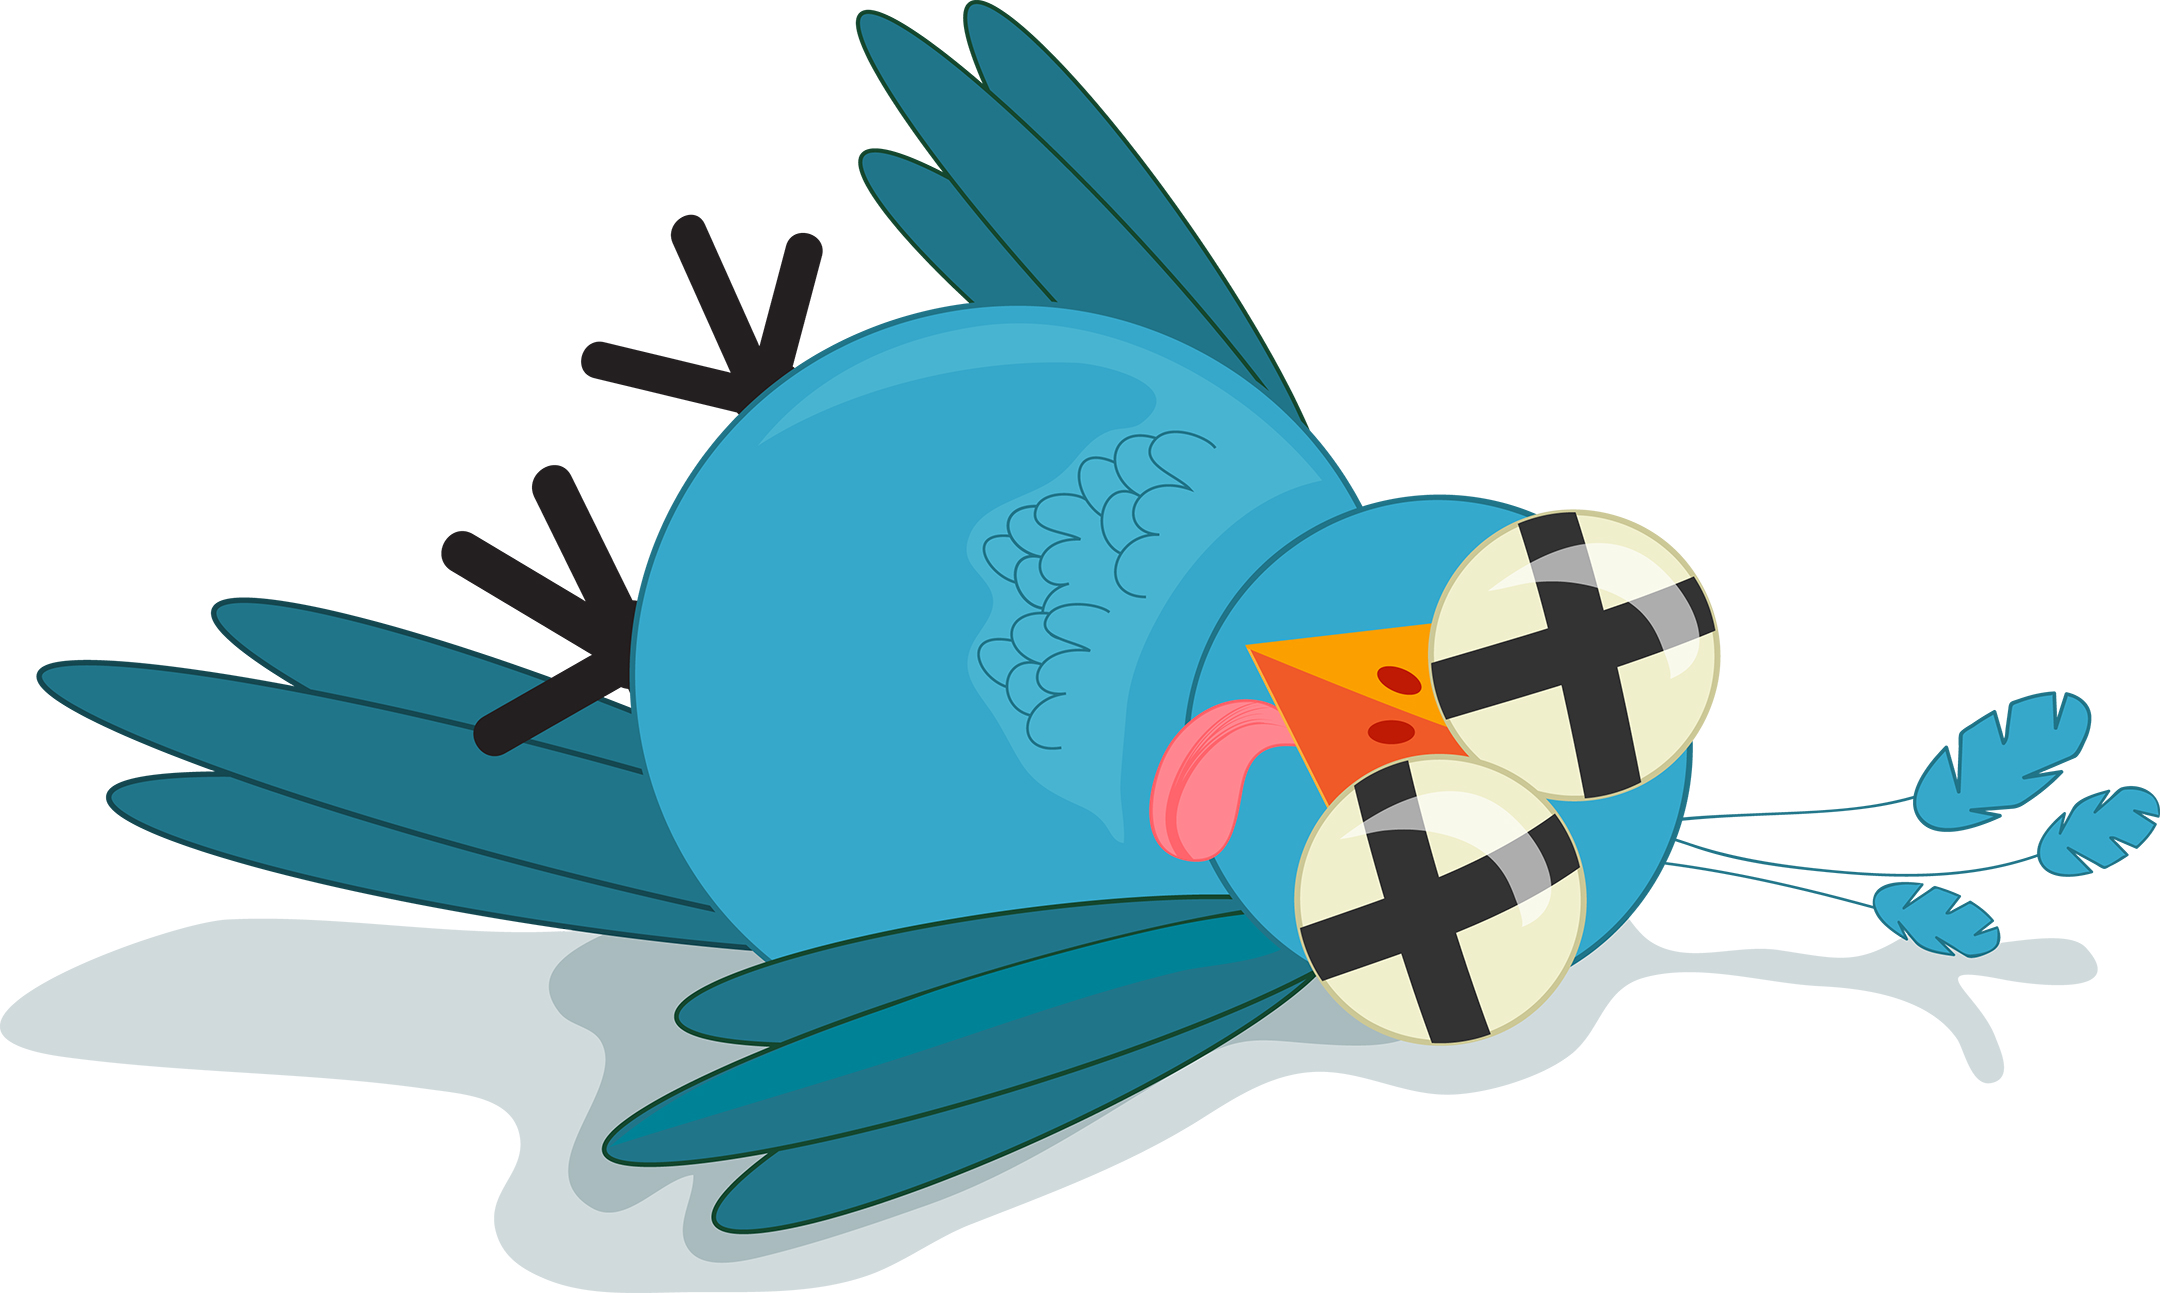 A cute, tongue-in-cheek, illustration of a dead or dazed twitter bird.